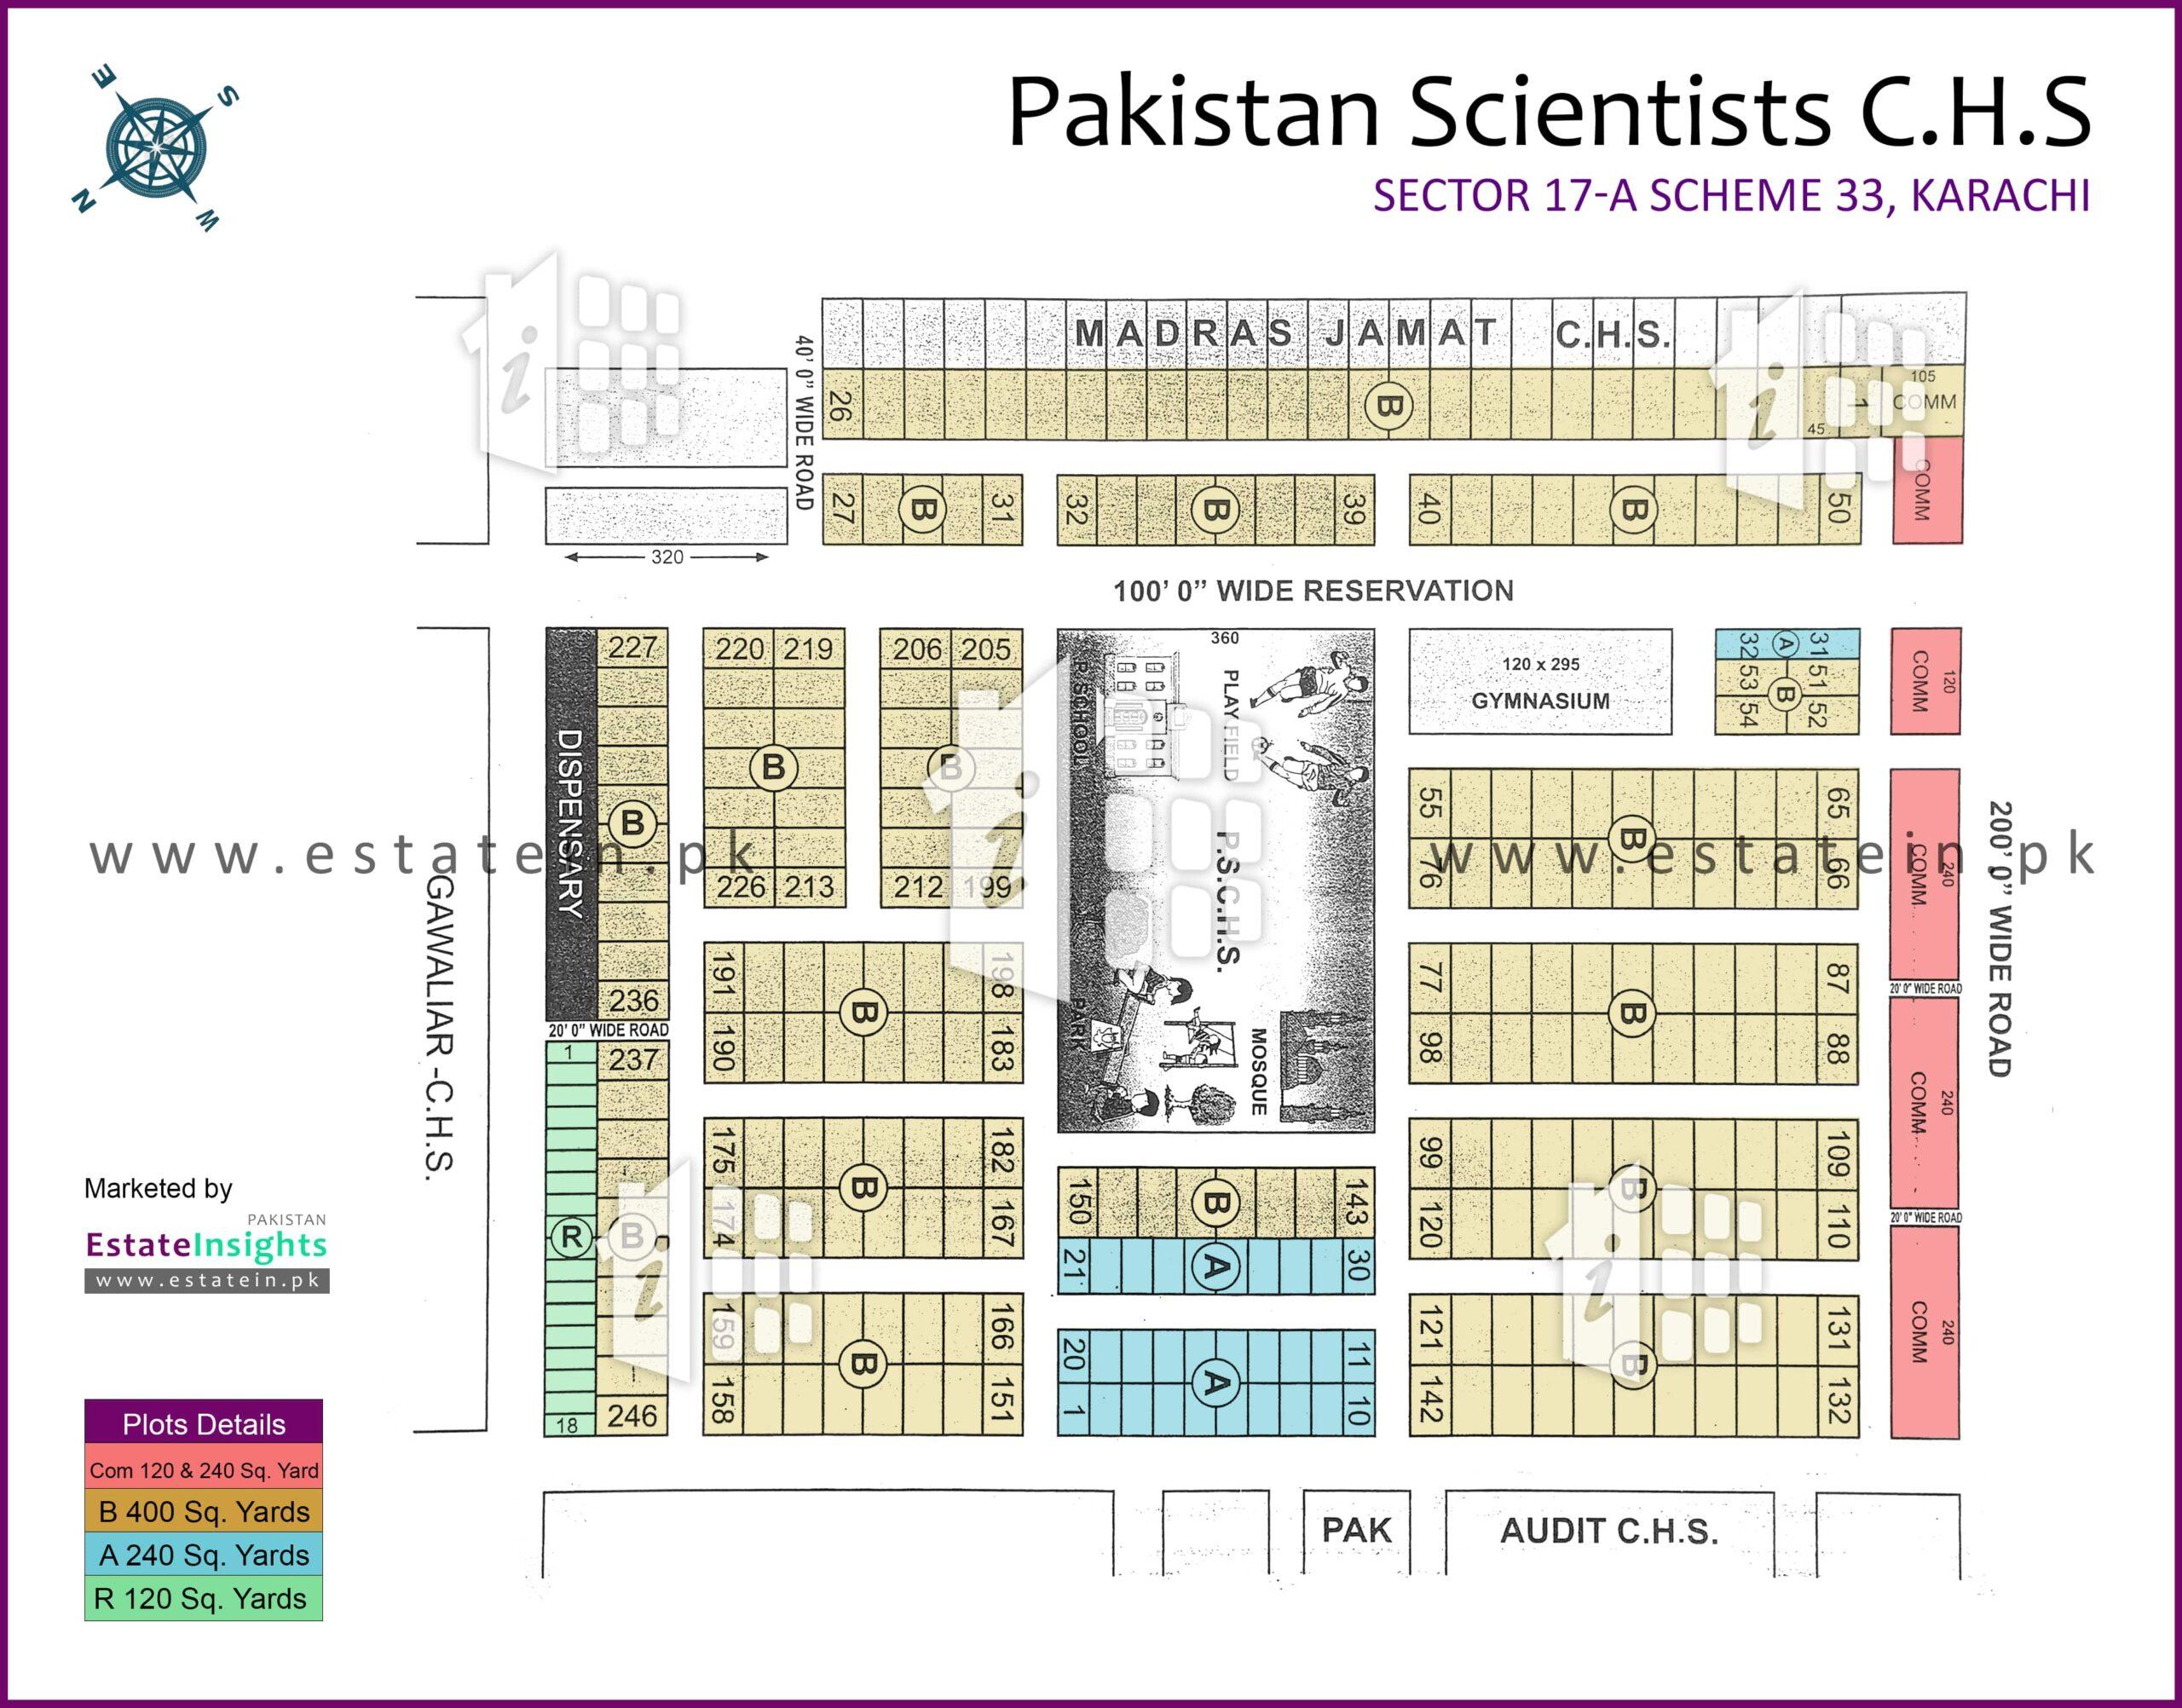 Pakistan Scientists Society